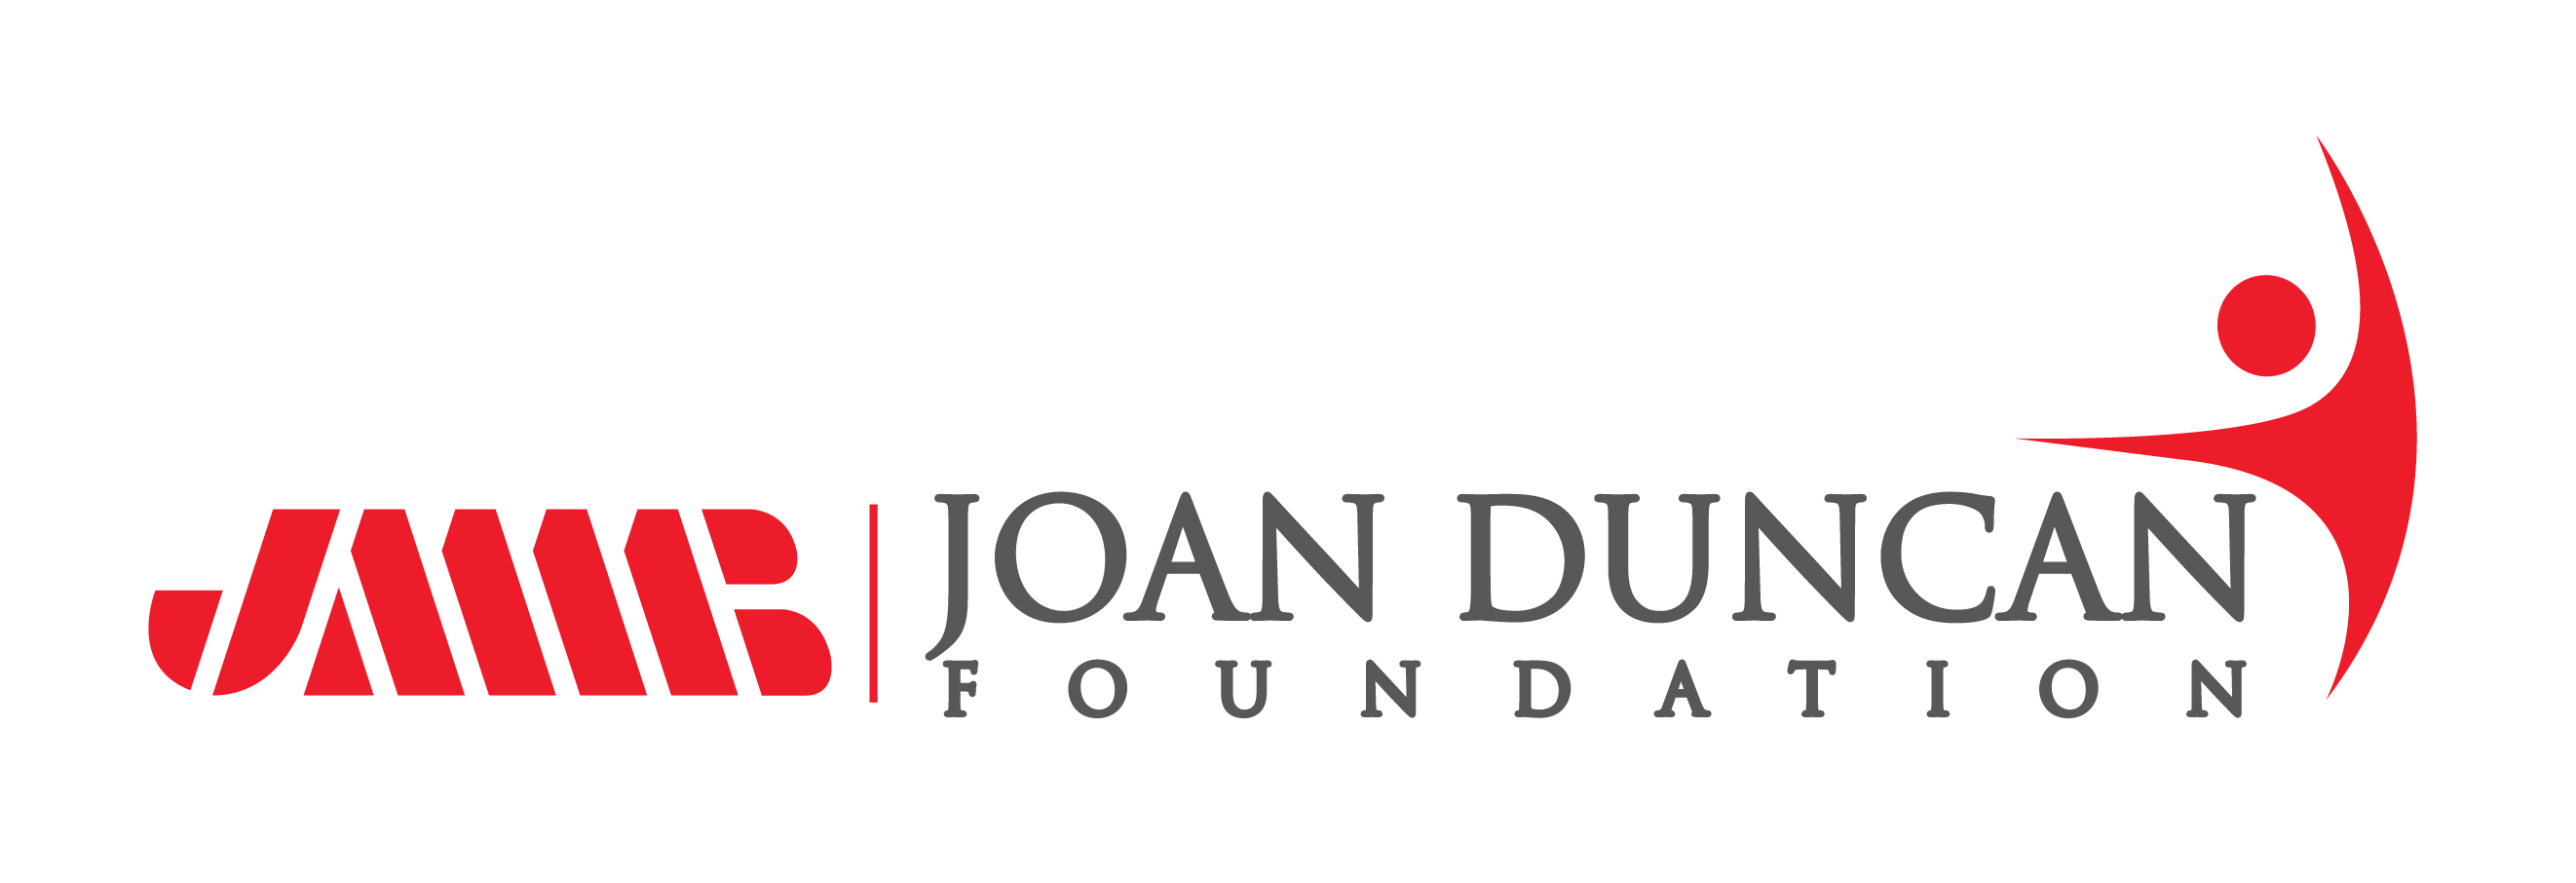 JMMB Joan Duncan Foundation logo